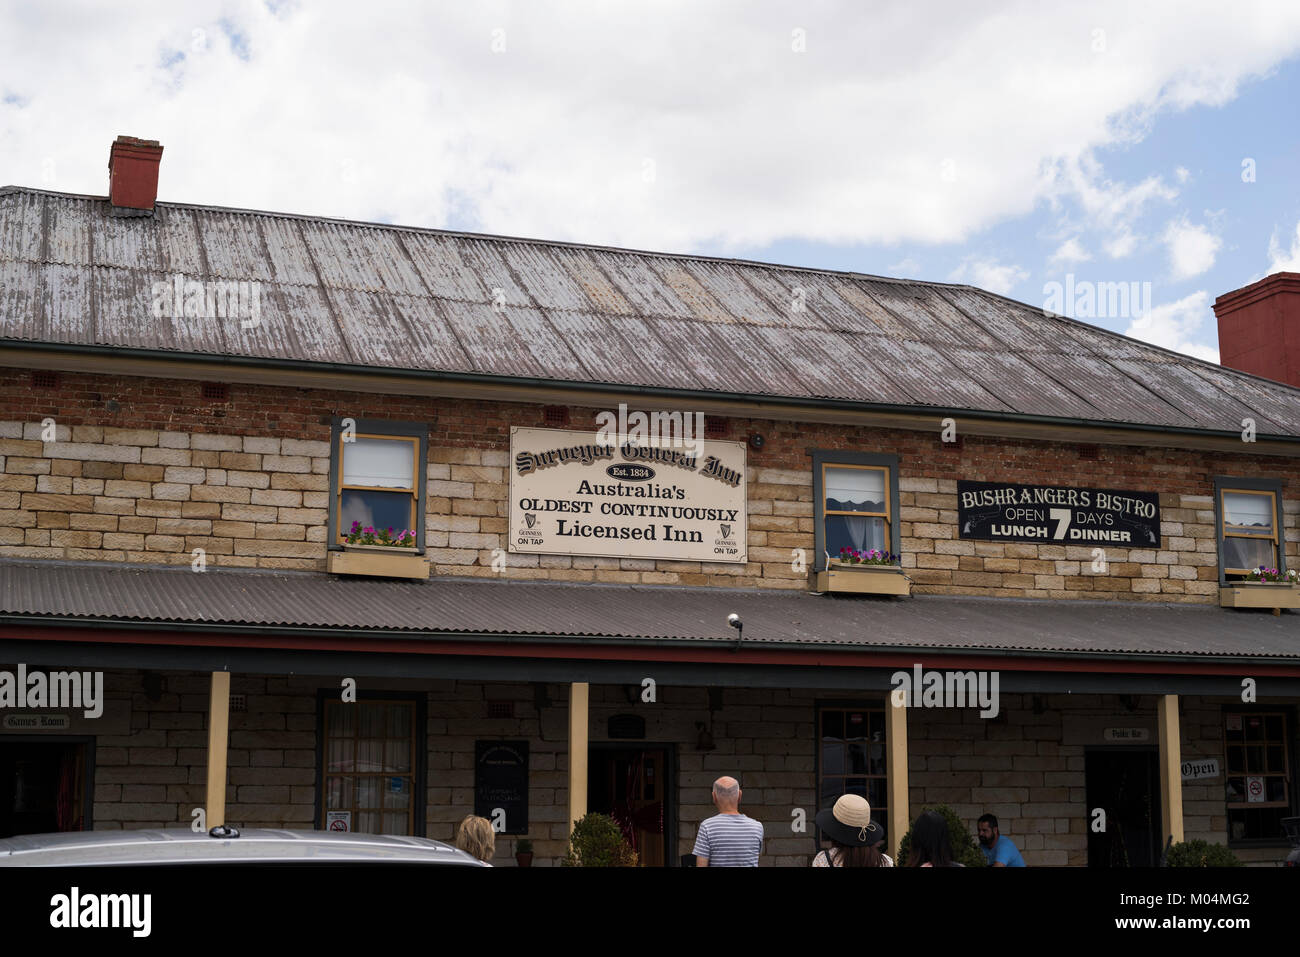 Surveyor General Inn, Berrima, Southern Highlands, New South Wales, NSW, Australia Stock Photo